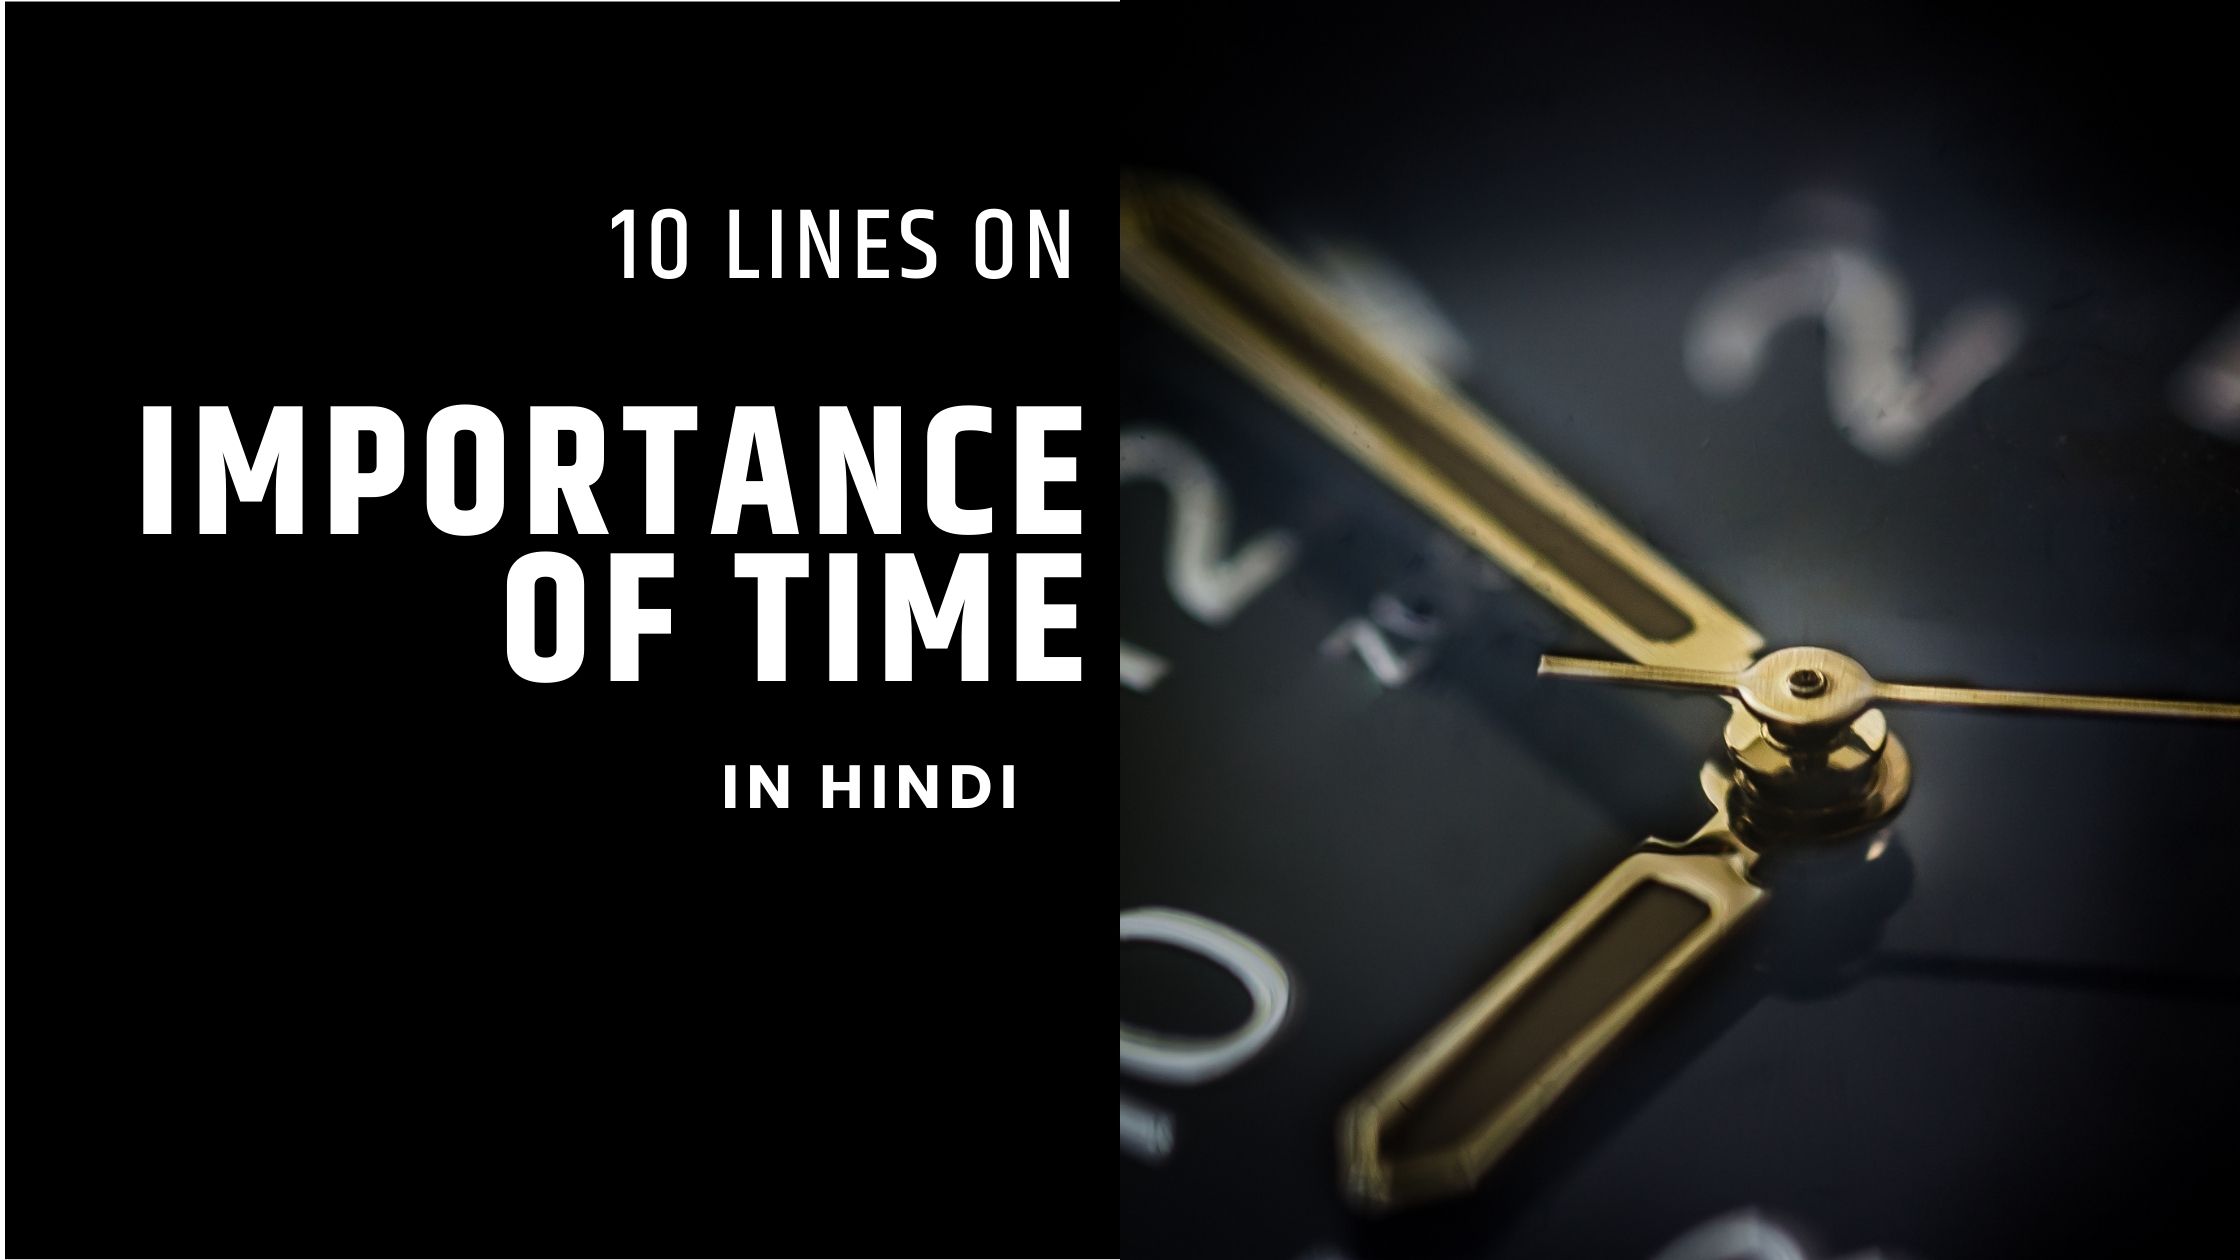 10 Lines on Importance of Time in Hindi | समय के महत्व पर 10 लाइन निबंध